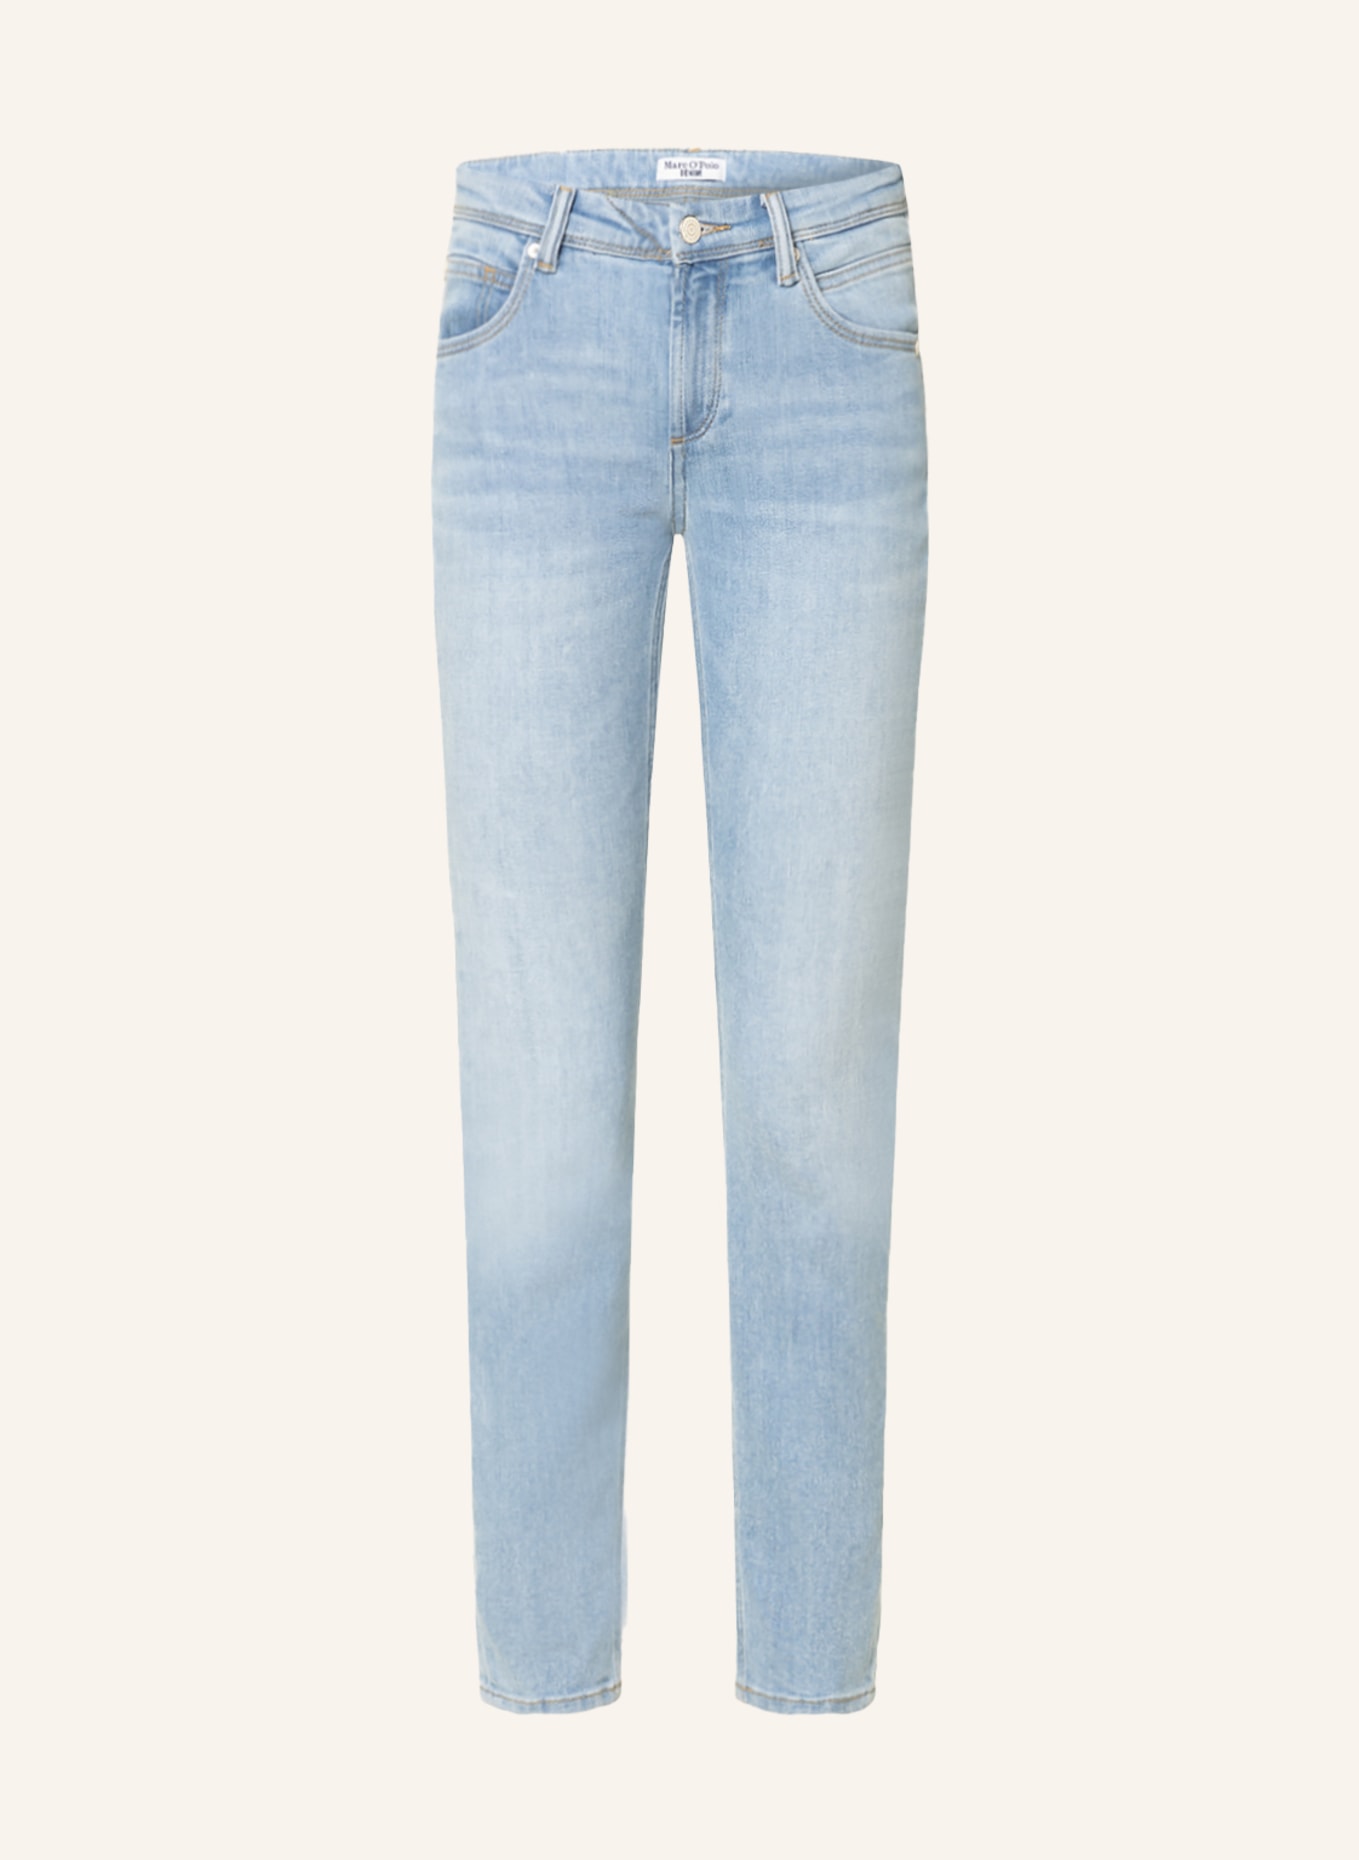 Marc O'Polo DENIM Skinny Jeans ALVA, Farbe: P24 multi/bleached cobalt blue (Bild 1)